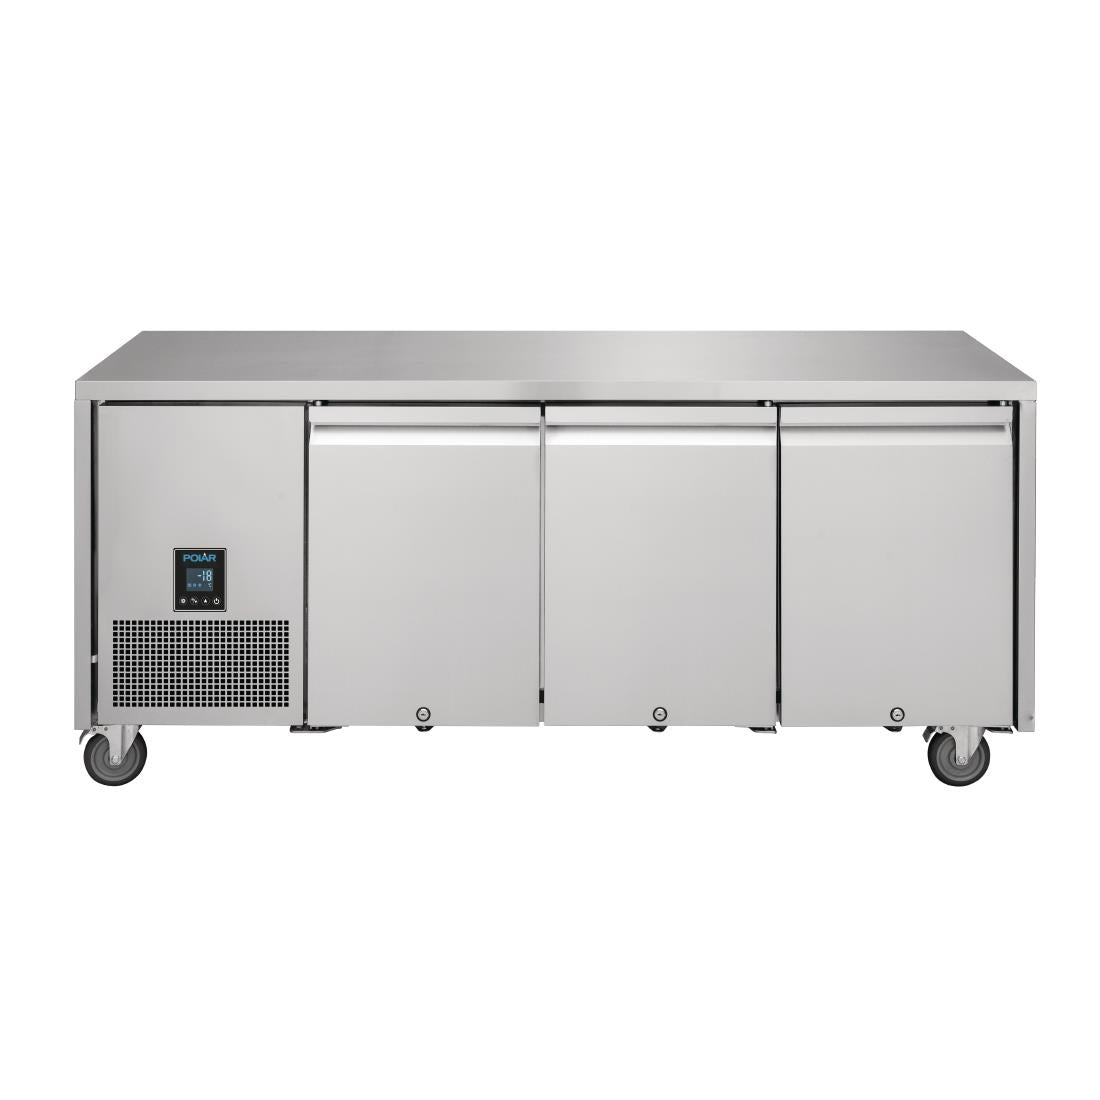 UA008 Polar U-Series Premium Triple Door Counter Freezer 420Ltr UA008